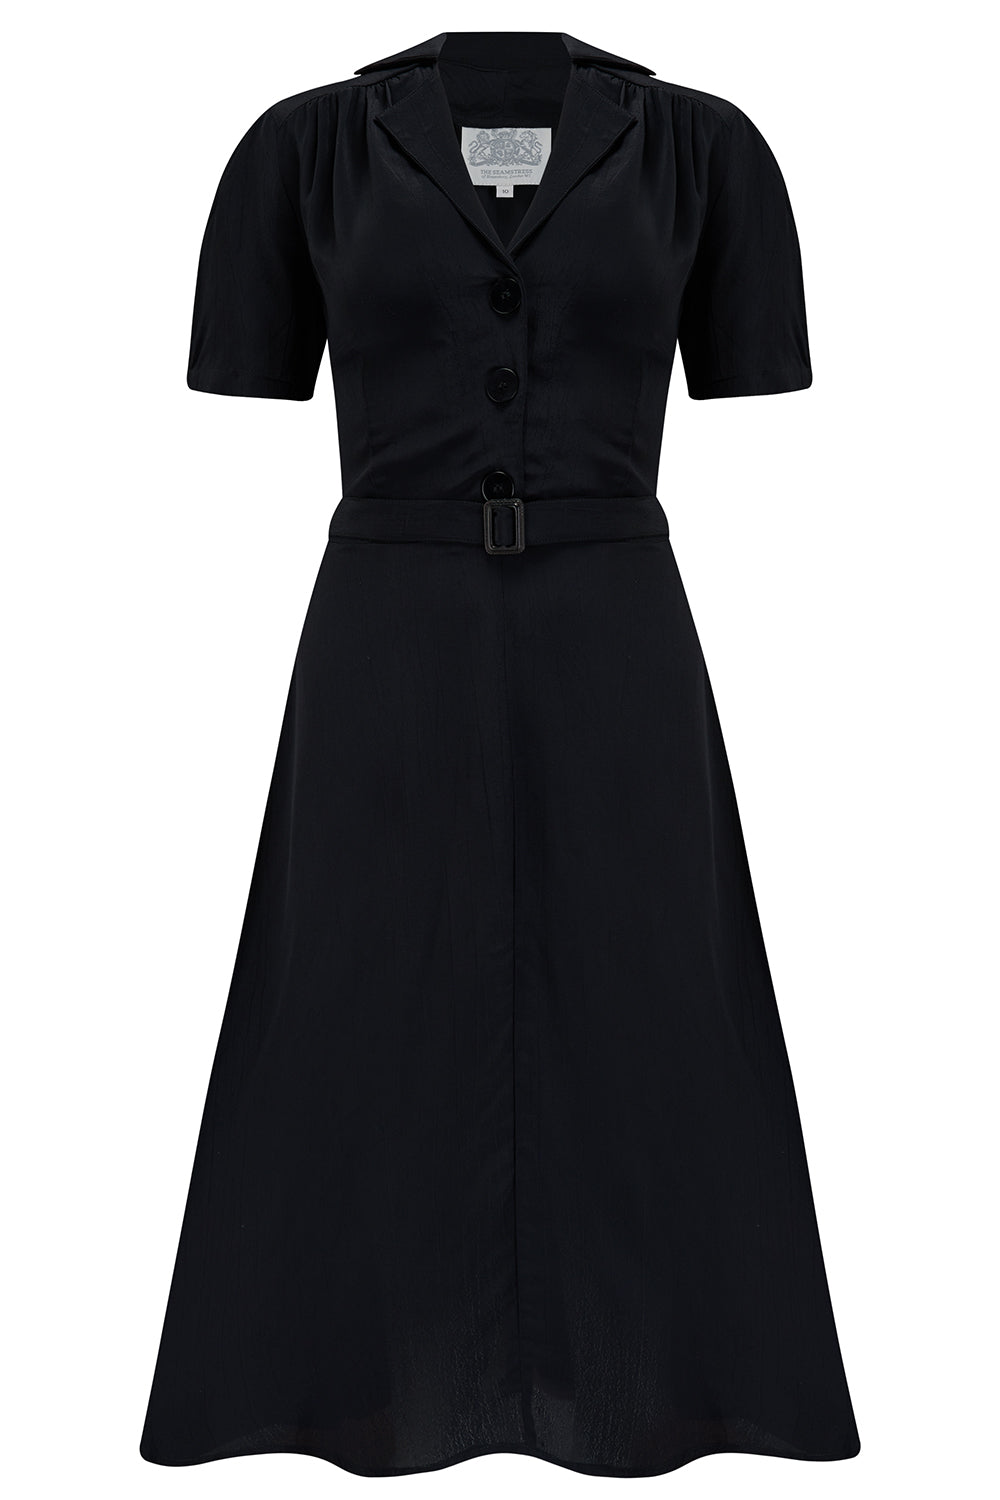 Lisa Shirt Dress in Liquorice Black, Authentic 1940s Vintage Style a –  Rock n Romance